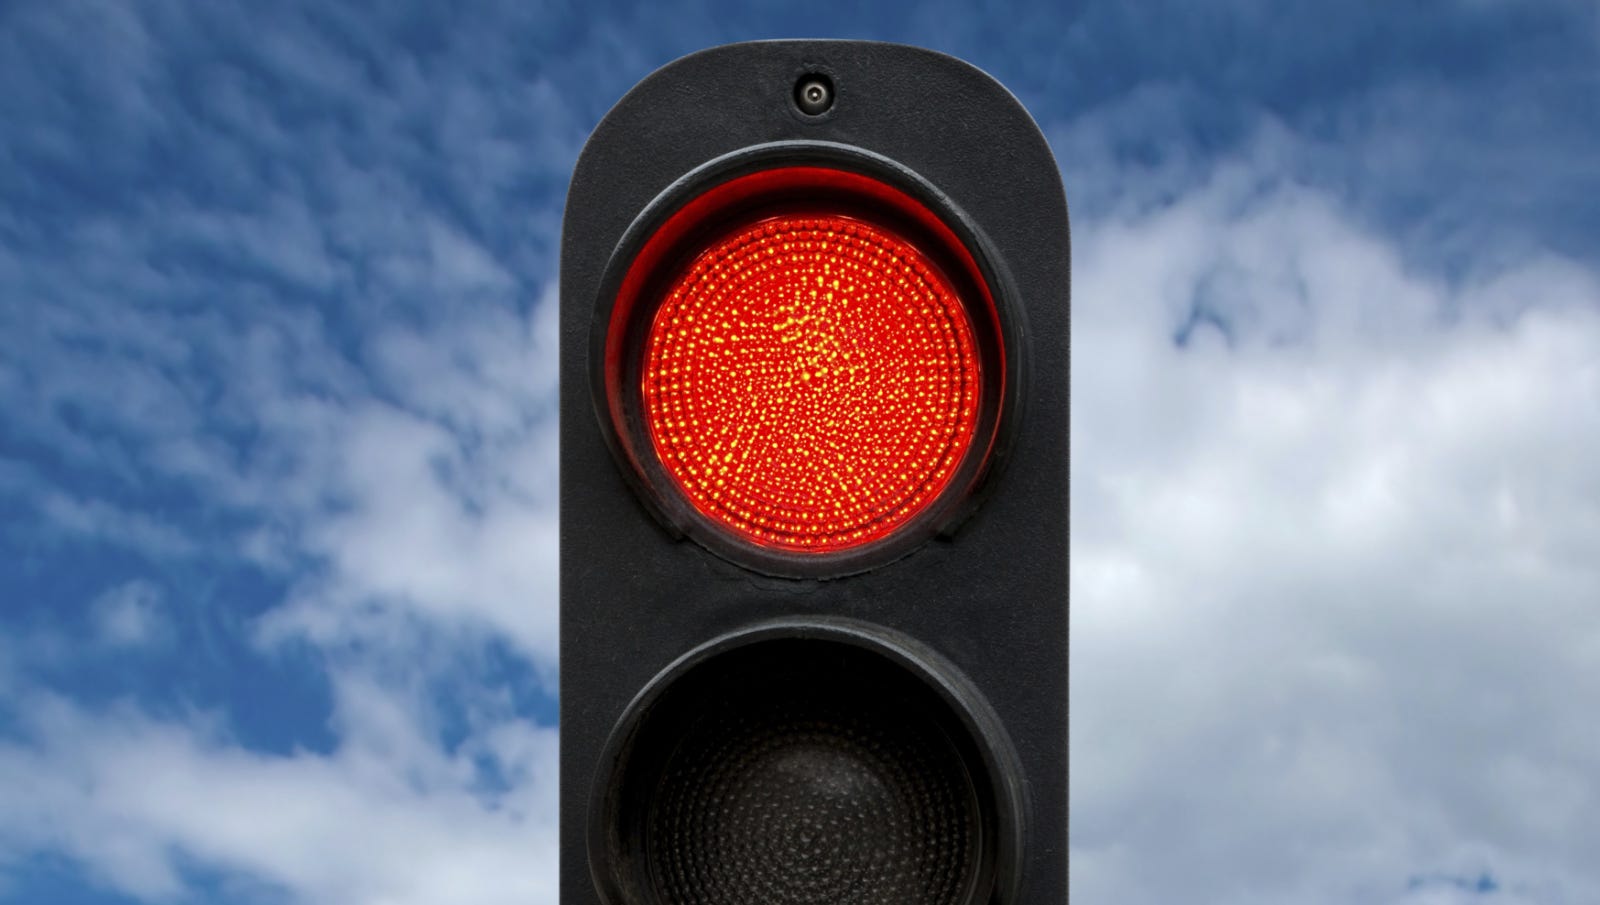 Traffic light red. Красный светофор. Красный сигнал светофора. Красный цвет светофора. Крассный цвеи светоыора.